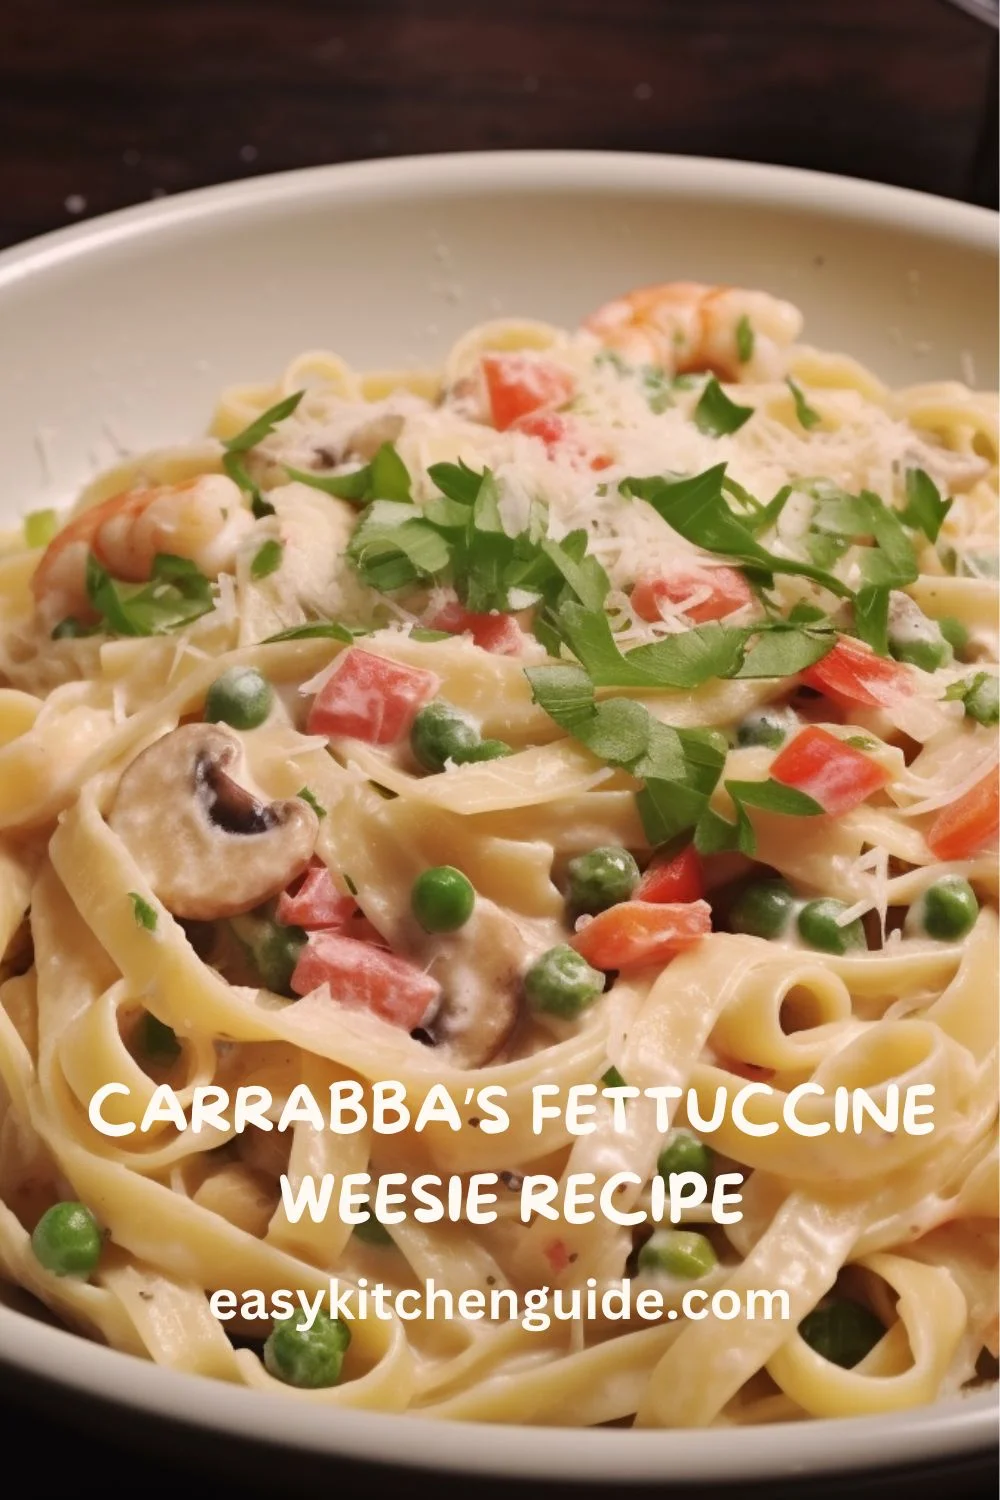 Carrabba’s Fettuccine Weesie Recipe